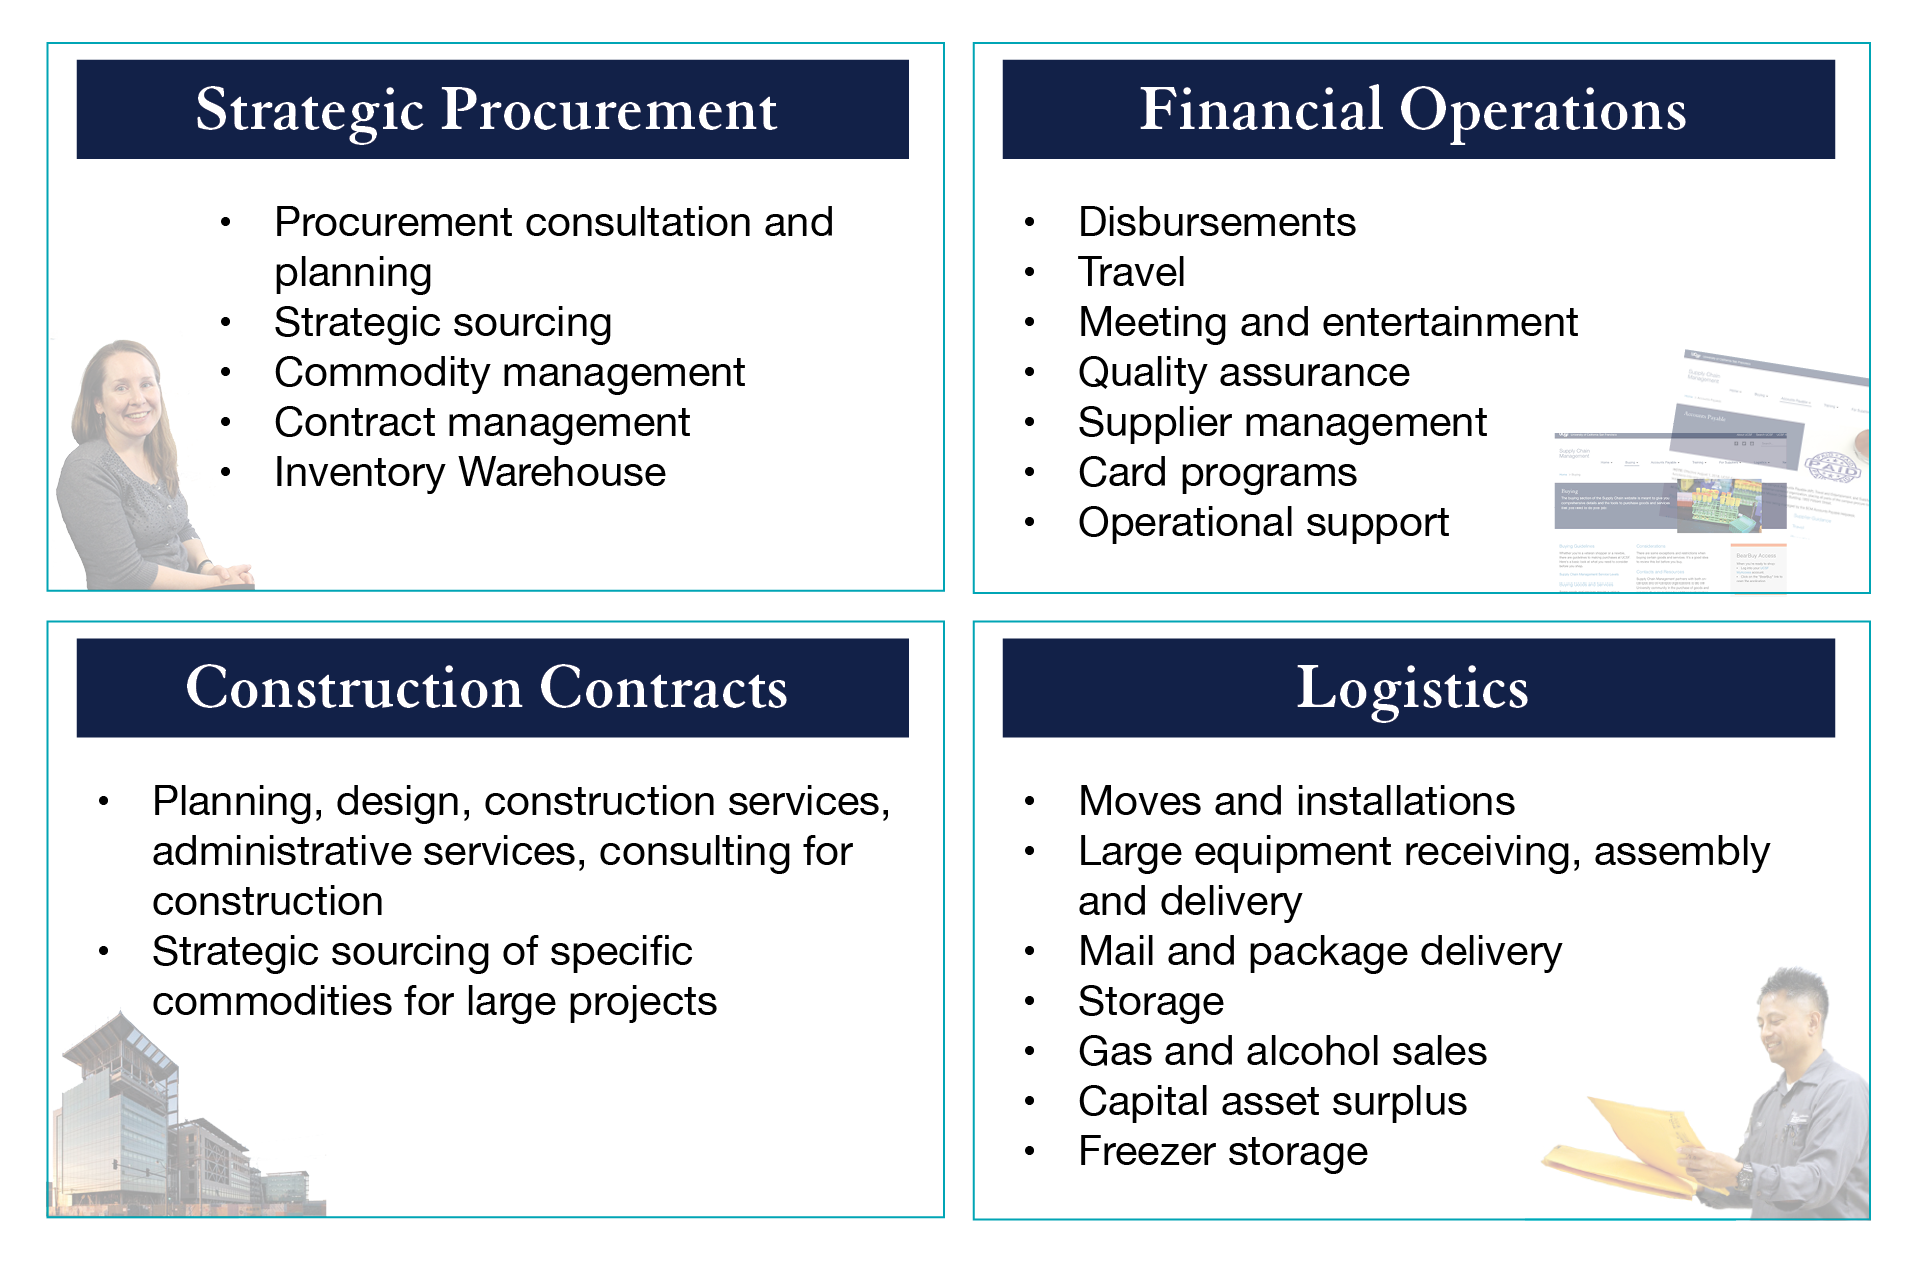 Supply Chain Management Chart